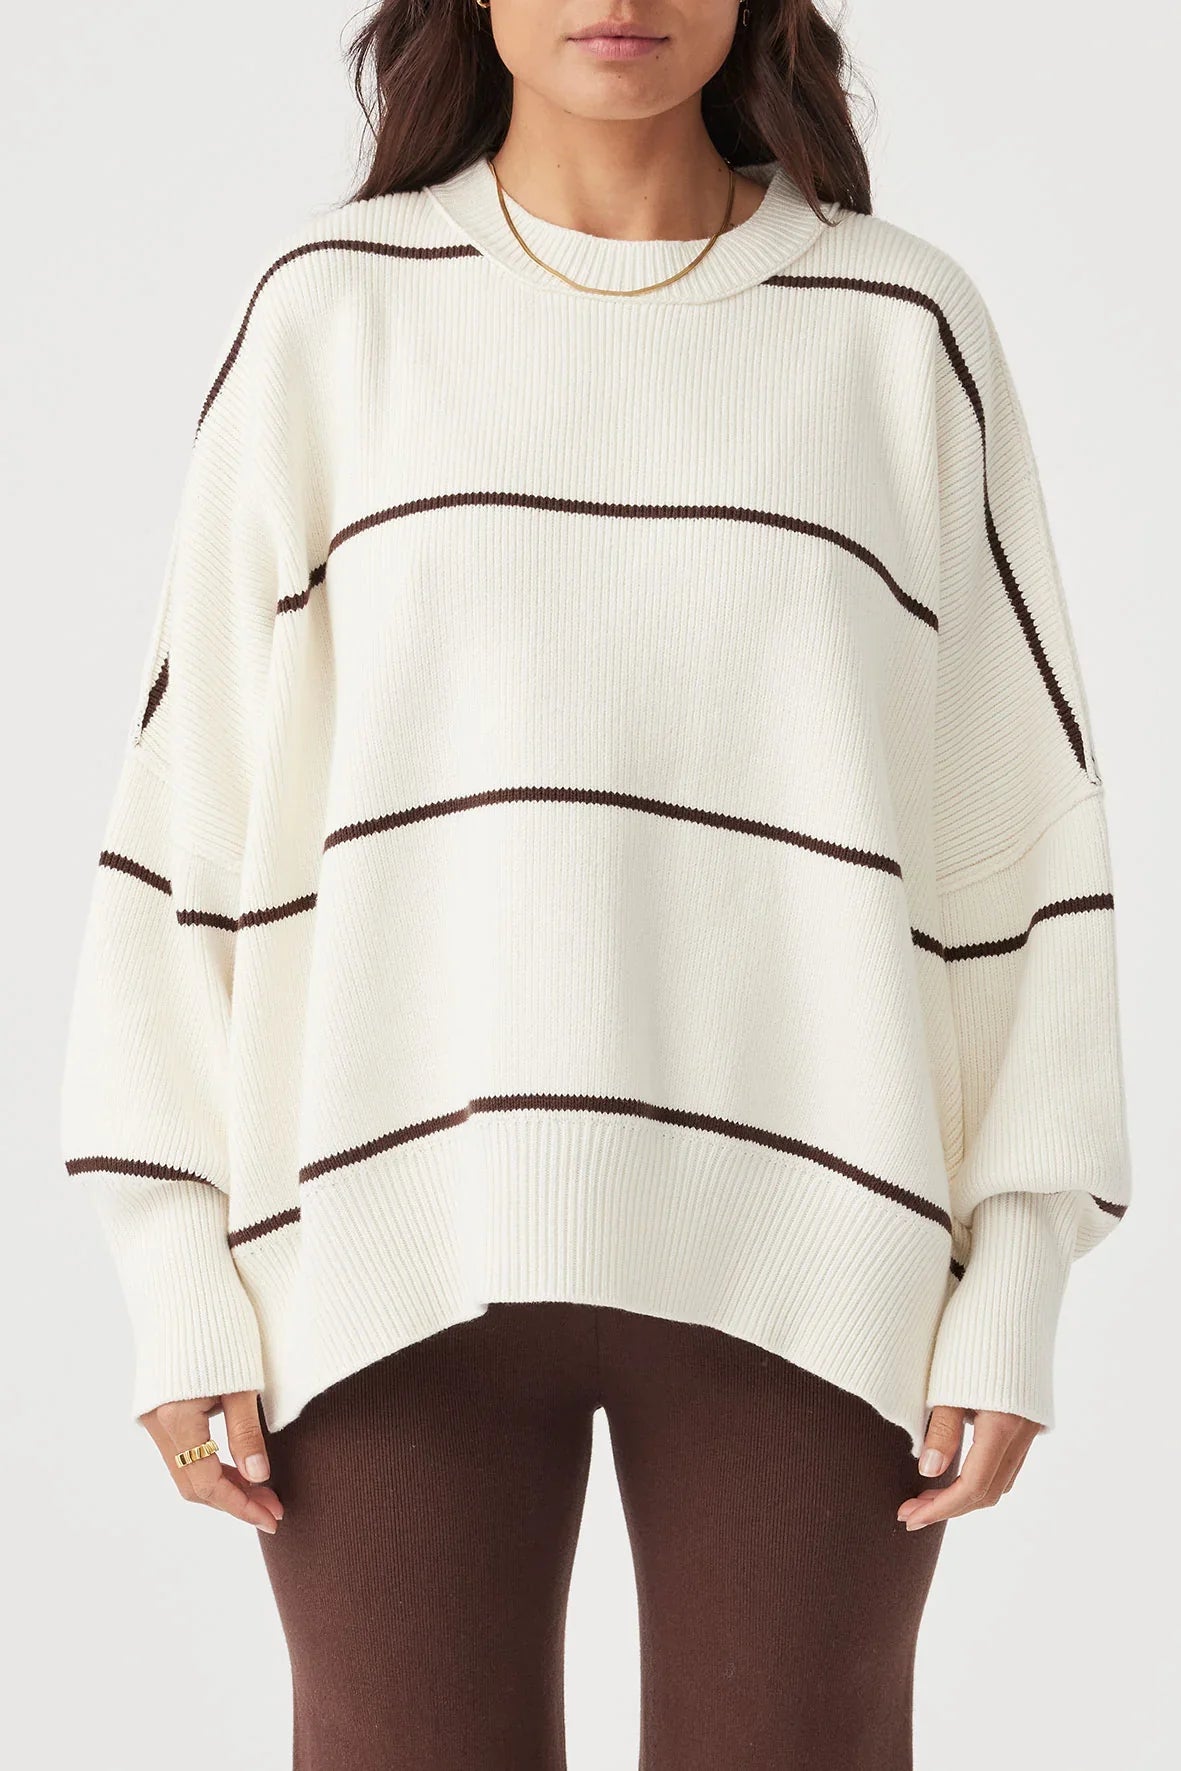 Harper Stripe Sweater - Cream & Chocolate